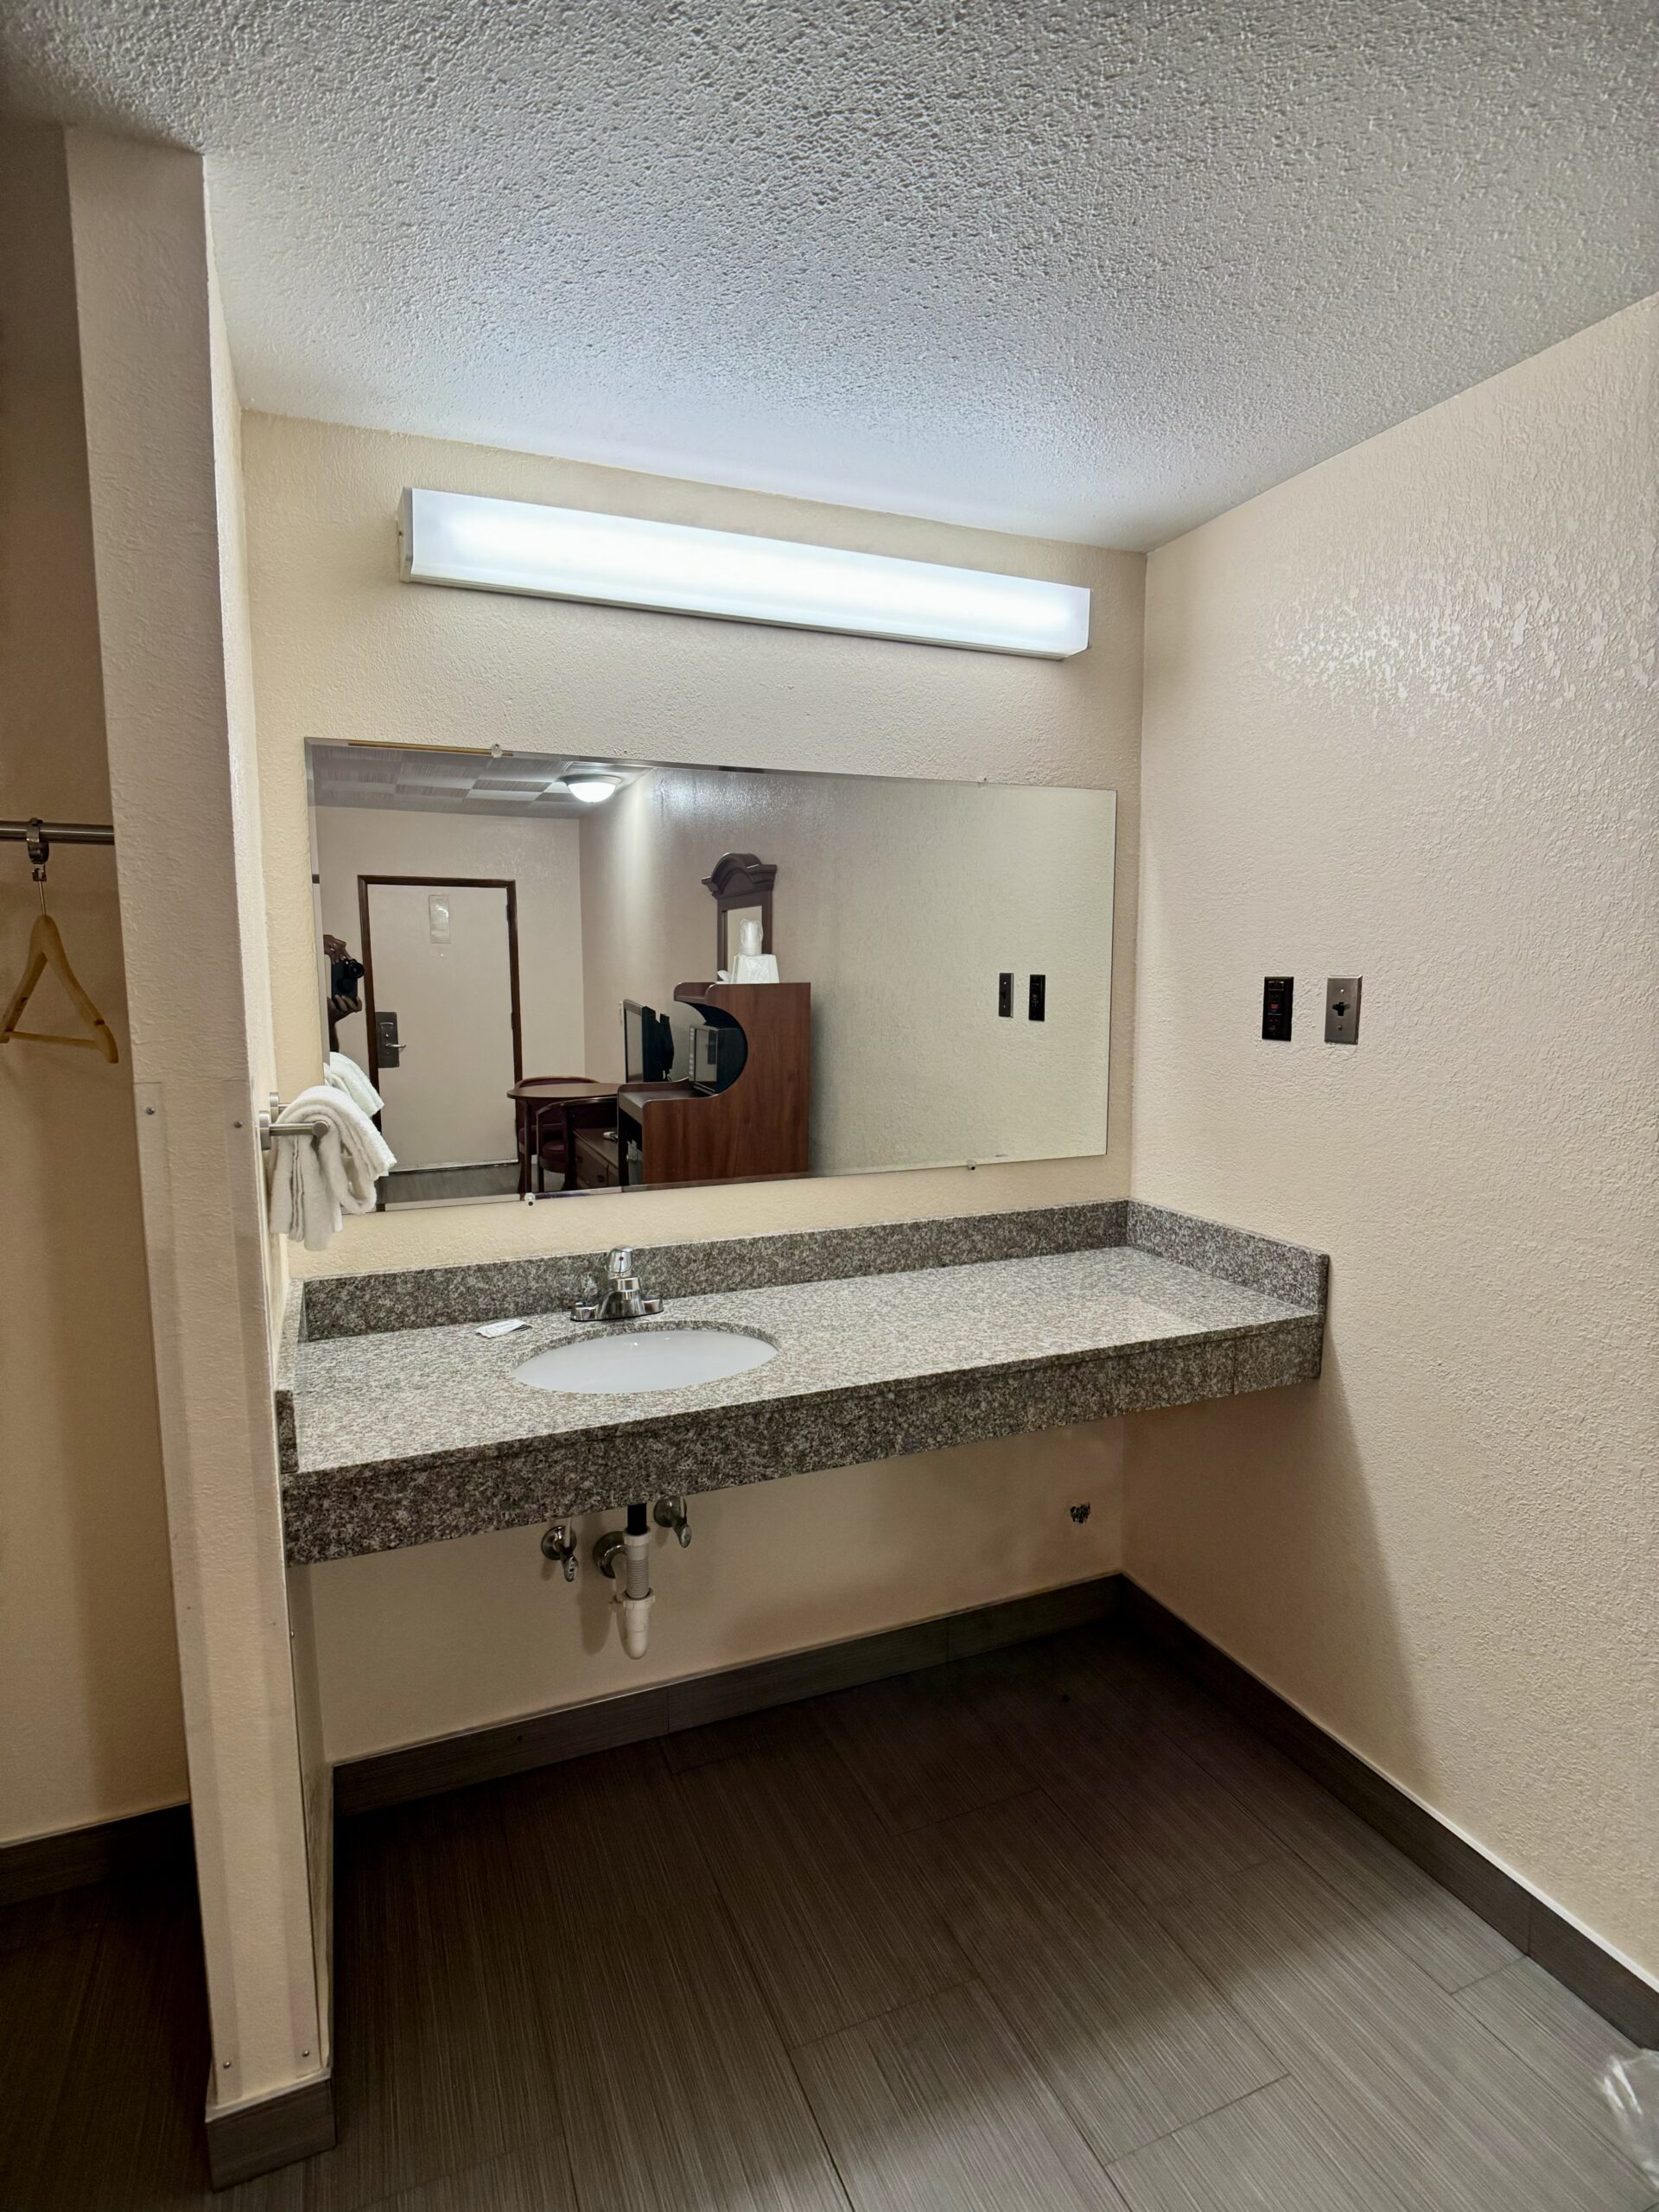 Knights Inn Galax bathroom in guest room